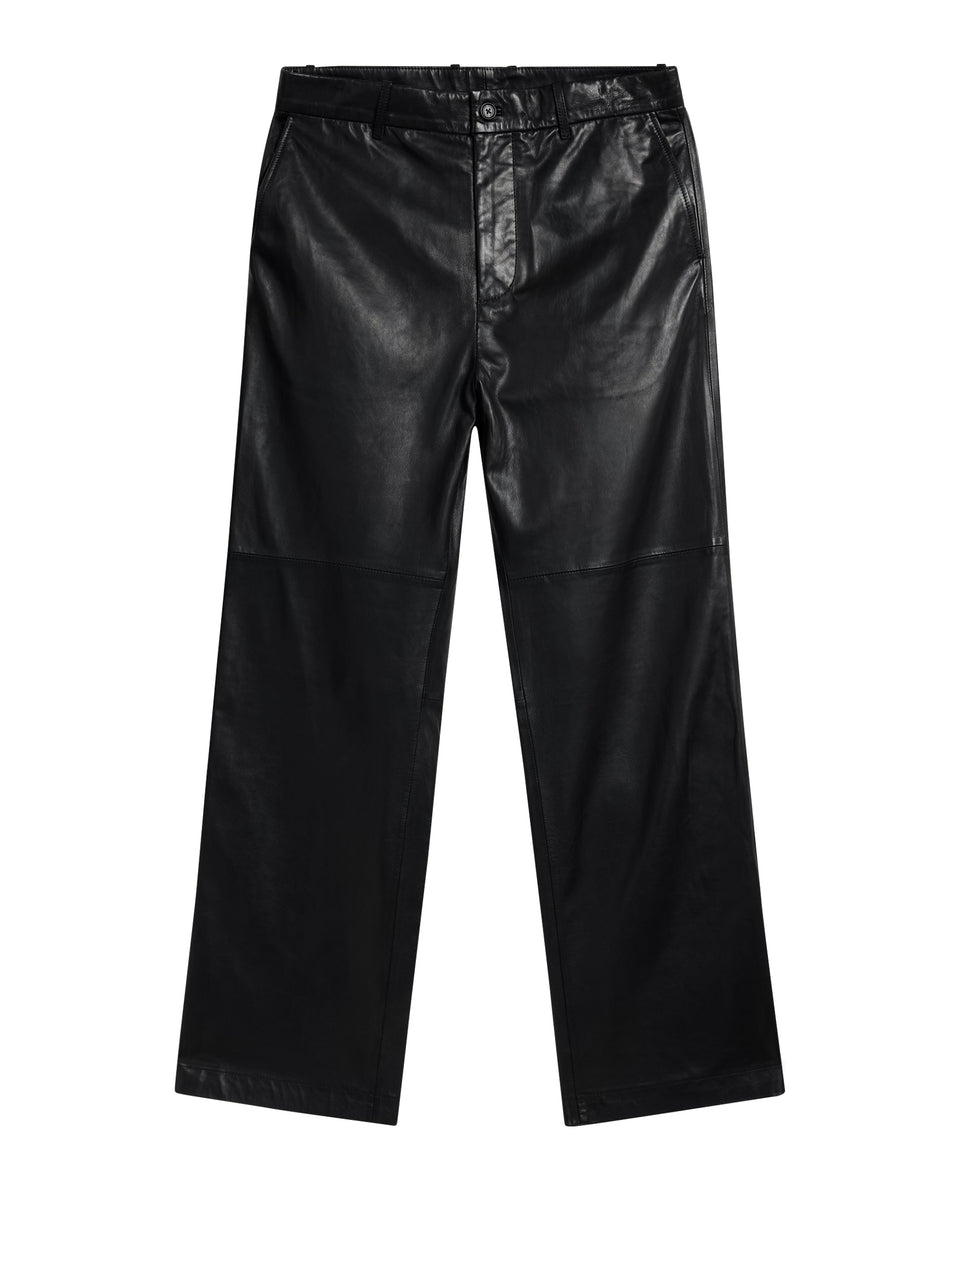 Haij Leather Pants / Black